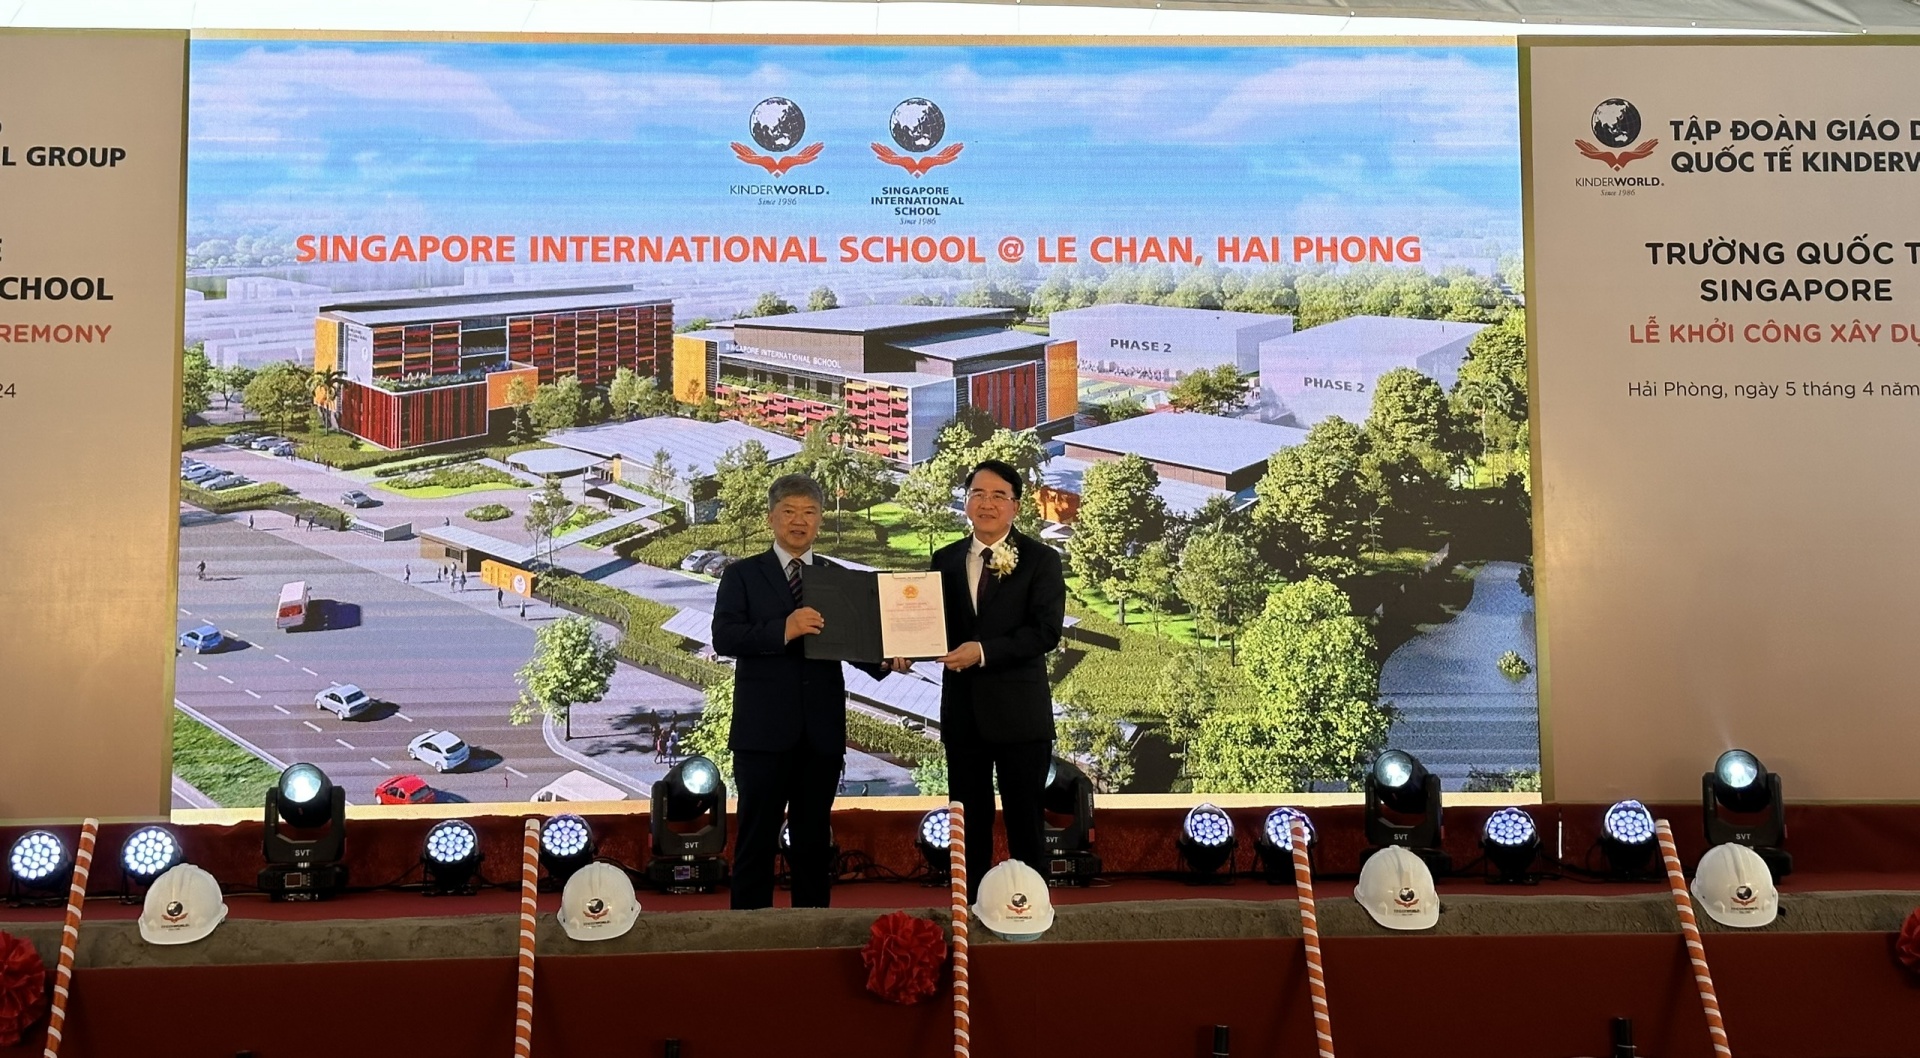 Construction of Singapore International School kicks-off in Haiphong